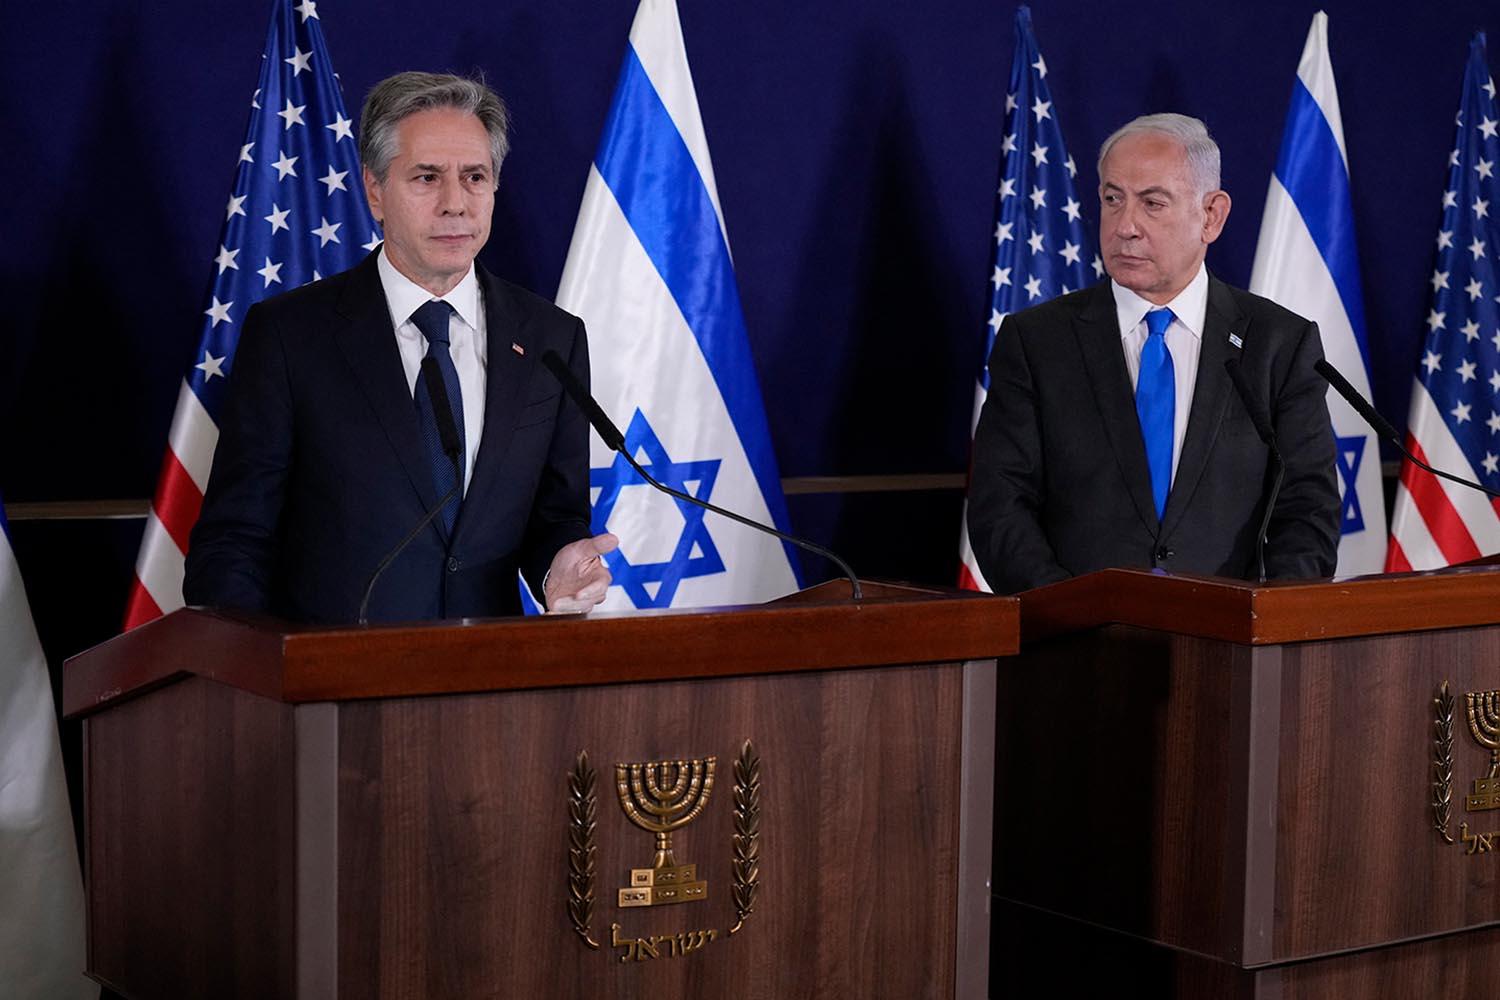 netanyahu-rejects-hamas-truce-plan-after-meeting-us-diplomat-SPACEBAR-Hero.jpg